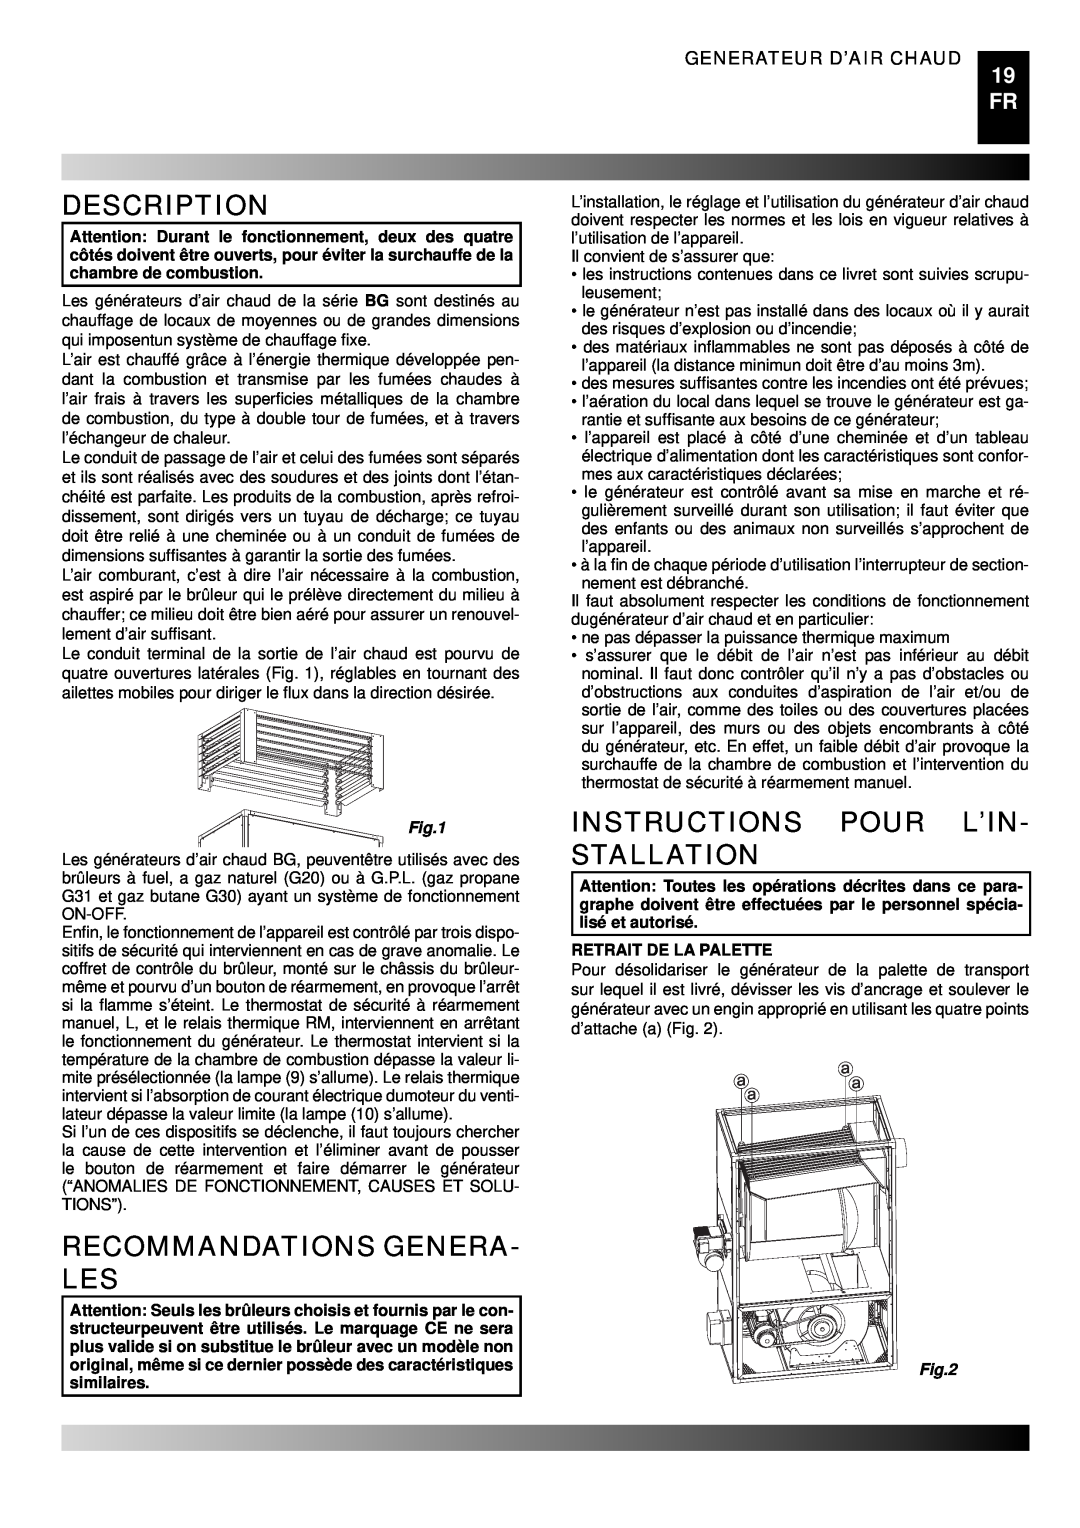 Master Lock BG 150 Recommandations Genera- Les, Instructions Pour L’In- Stallation, Generateur D’Air Chaud, Description 